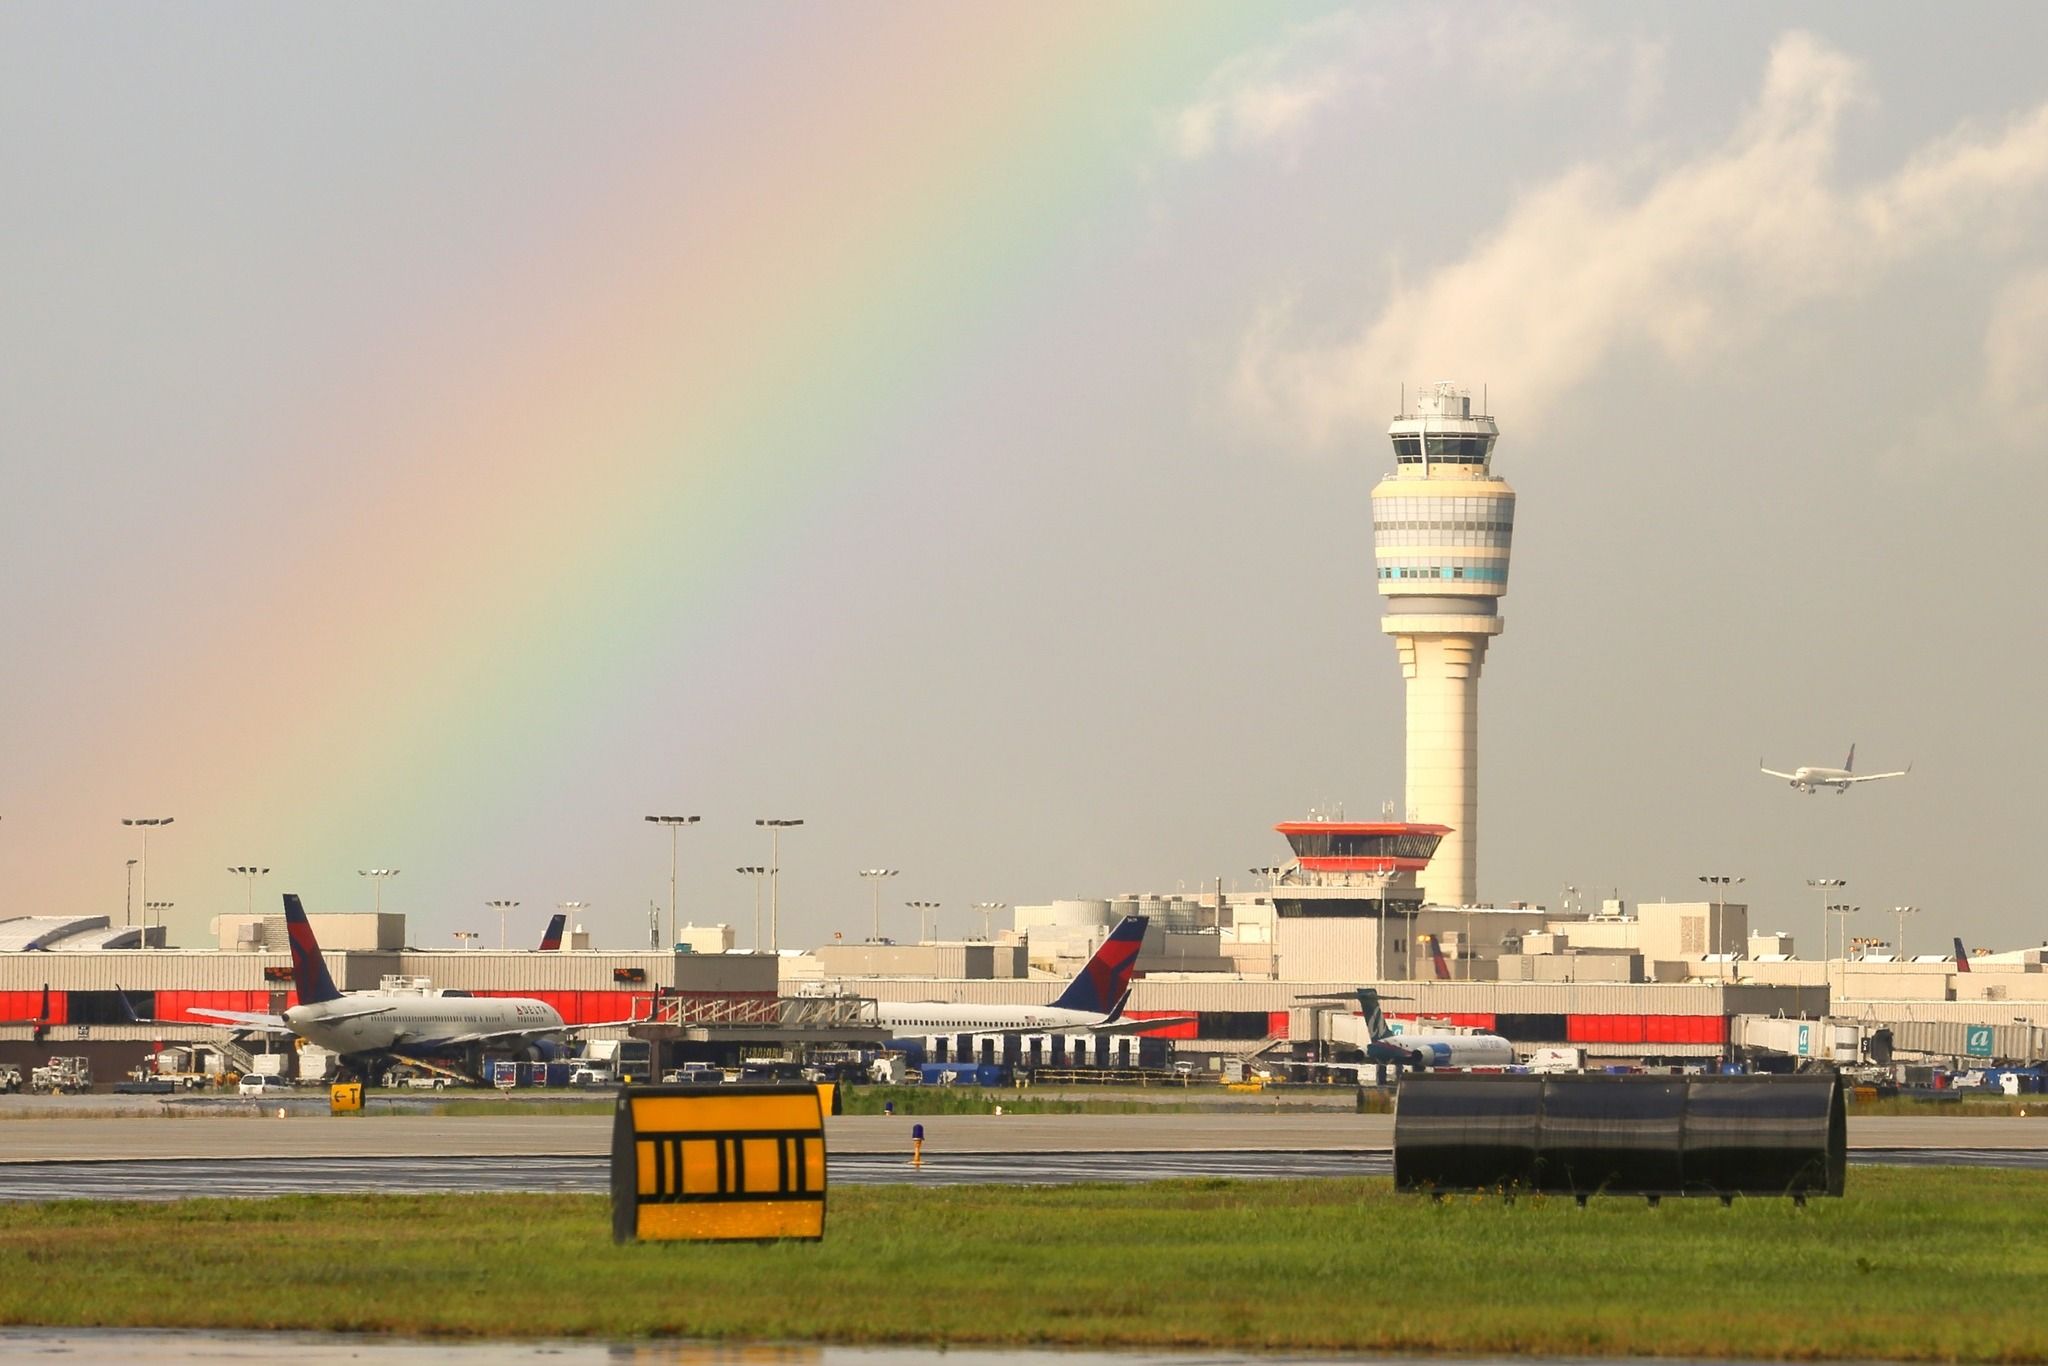 A Rainbow seen in the background of Hartsfield-Jackson Atlanta International Airport.